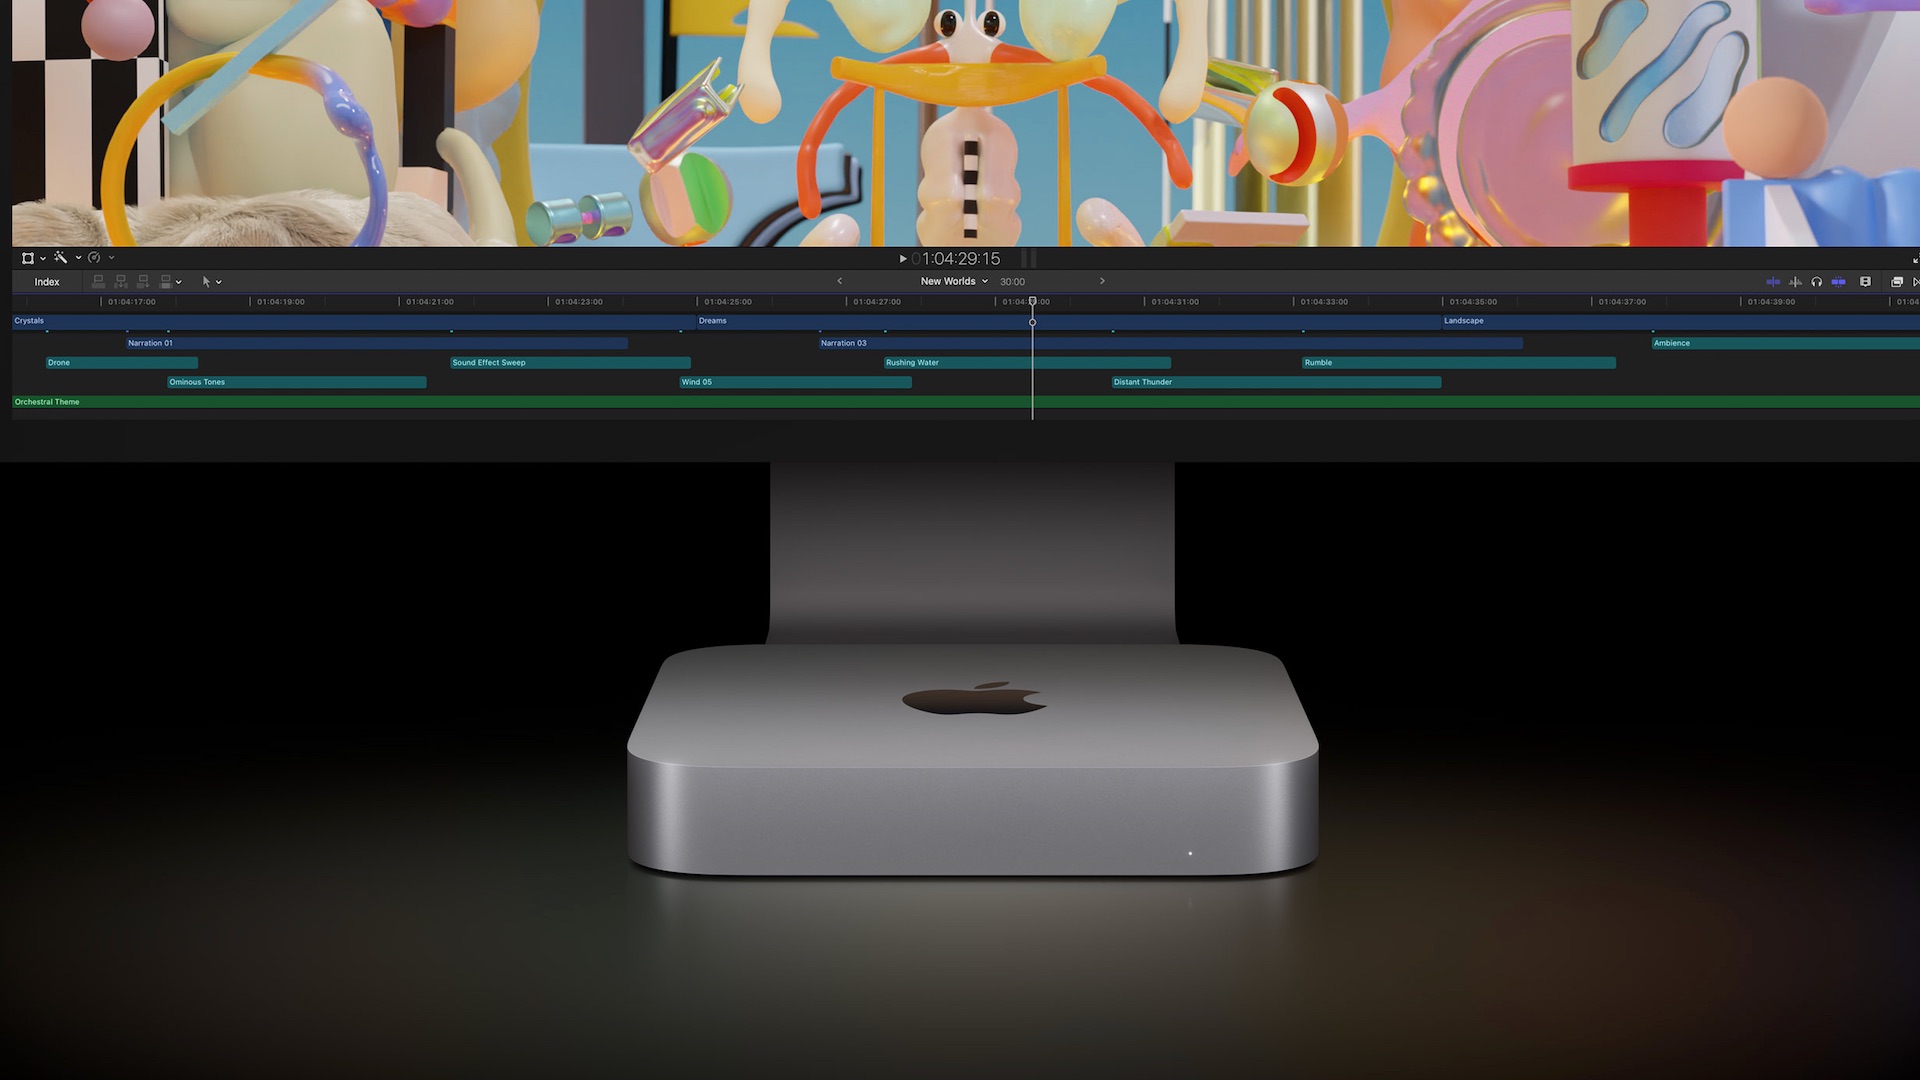 Apple Ordinateur de bureau iMac 27 pas cher 